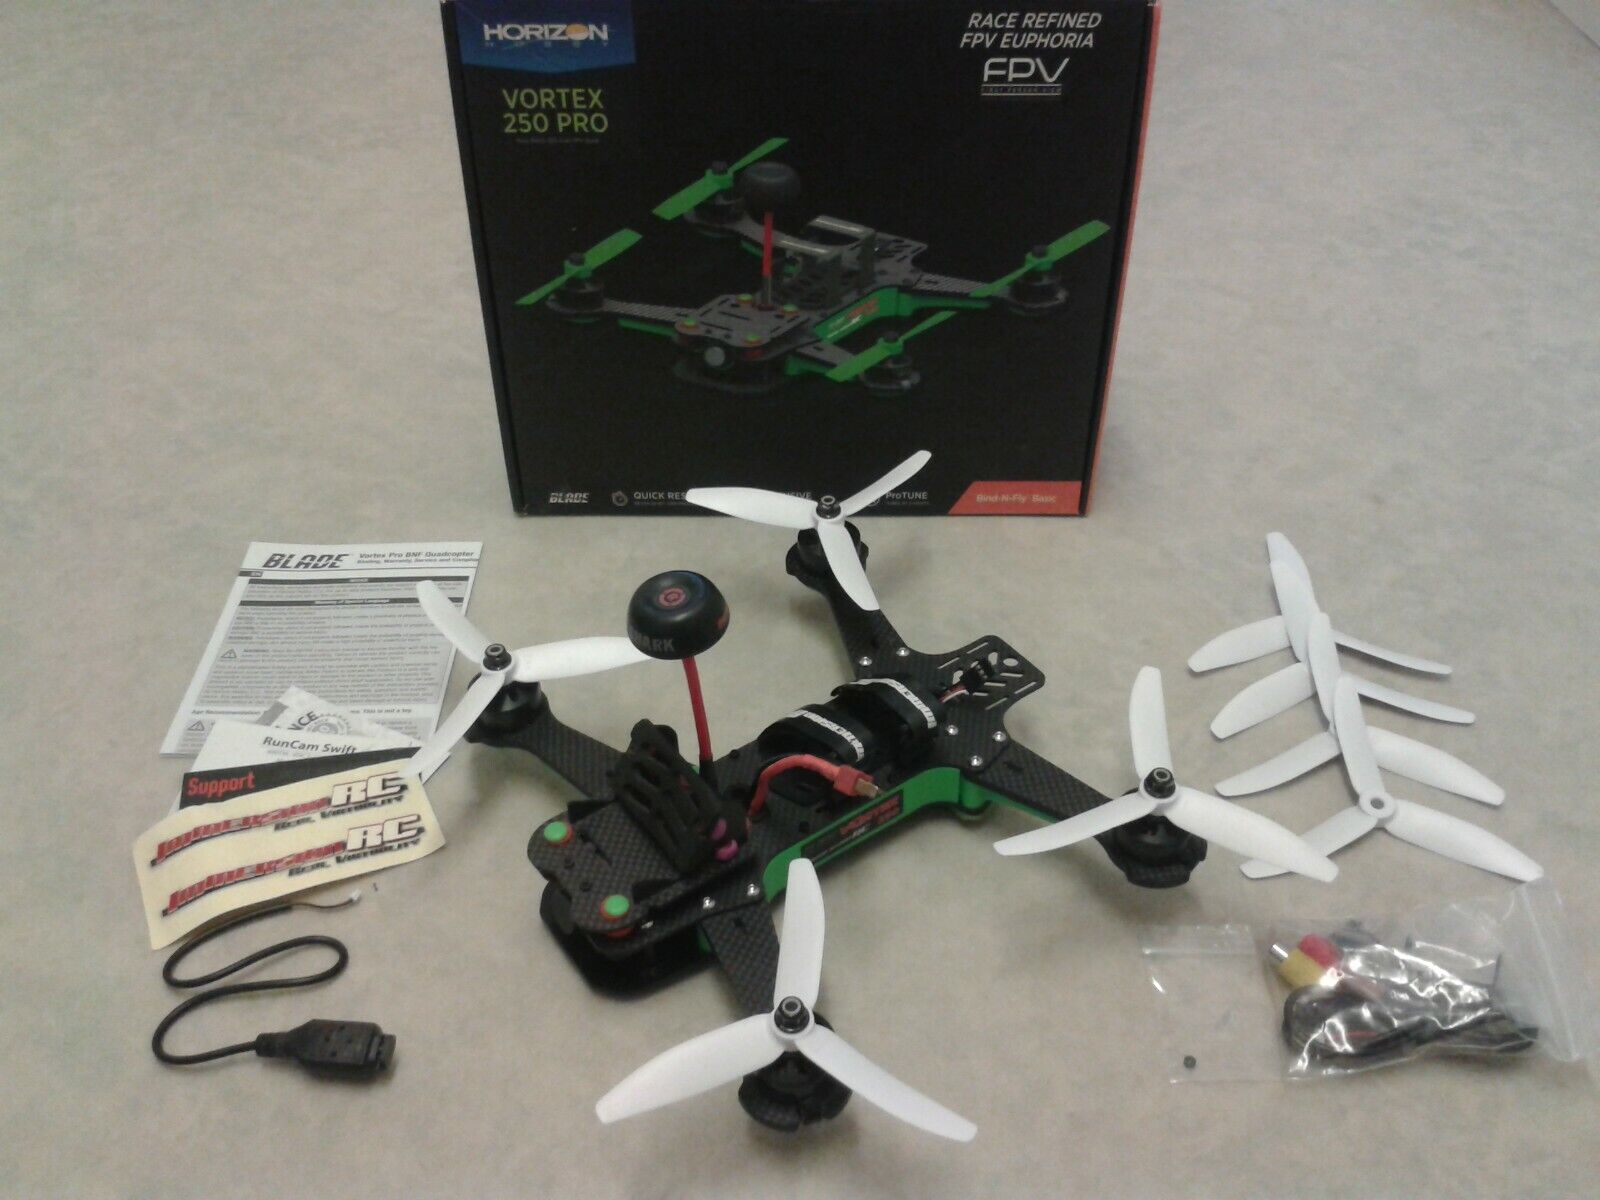 ImmersionRC Vortex 250 PRO RC Racing Drone 5.8GHz FPV Runcam Camera OSD More